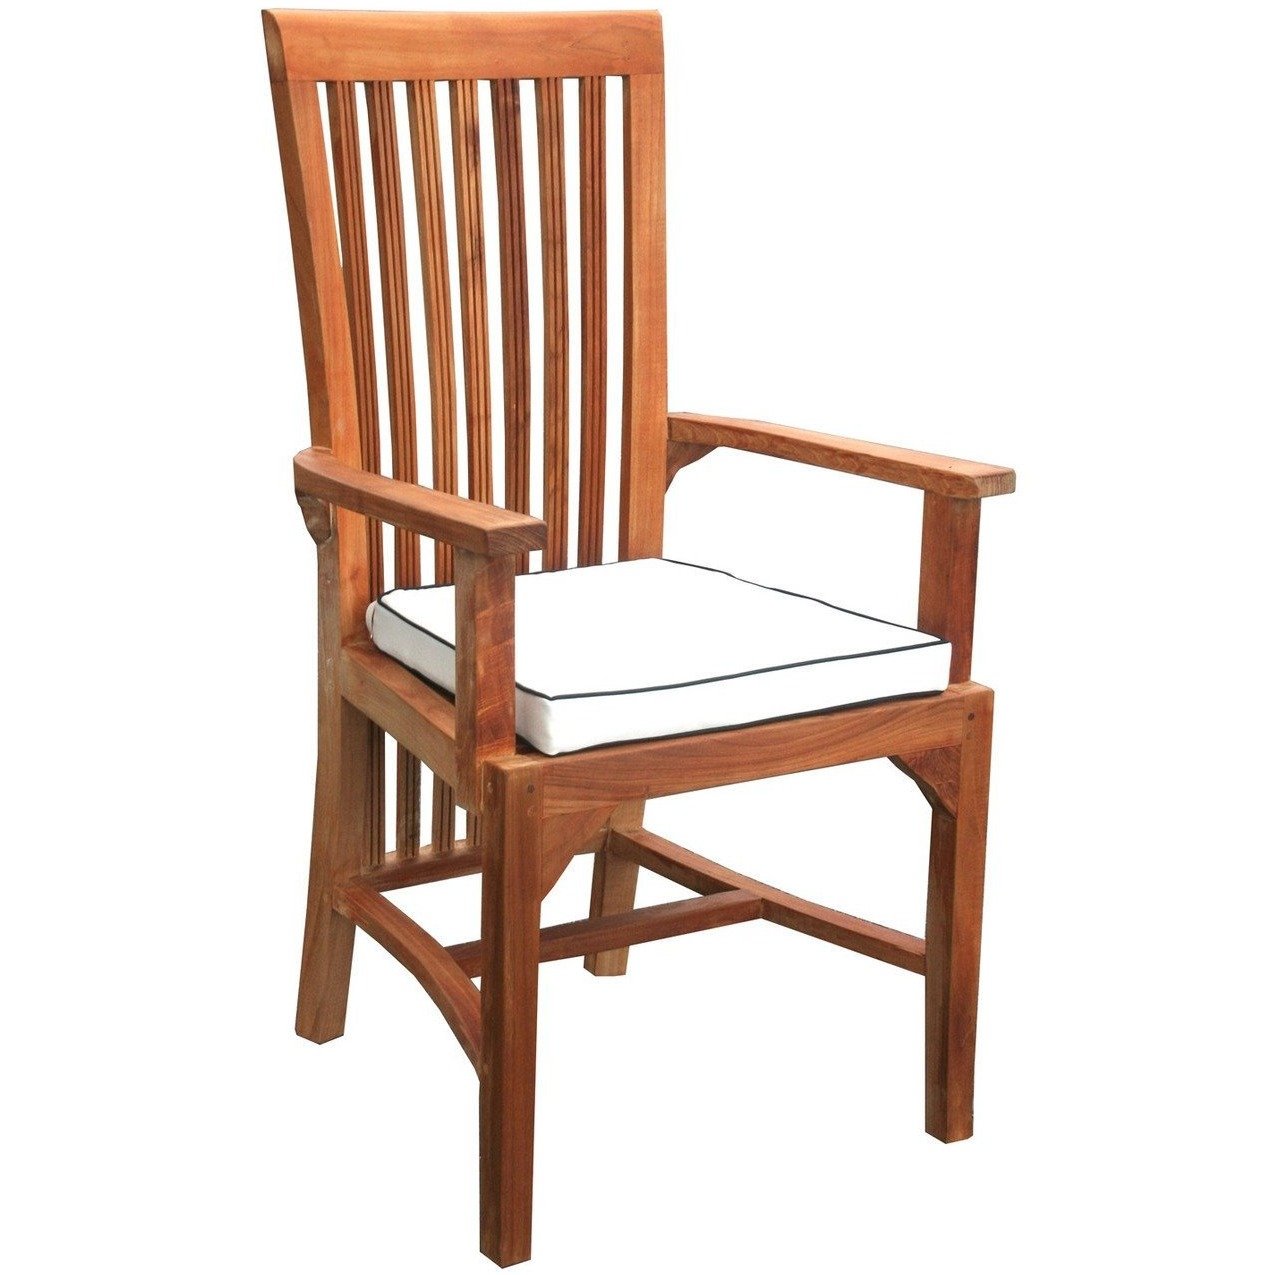 Cushion For West Palm/Balero Arm Chair (ASSEMBLED VERSIONS) - Chic Teak